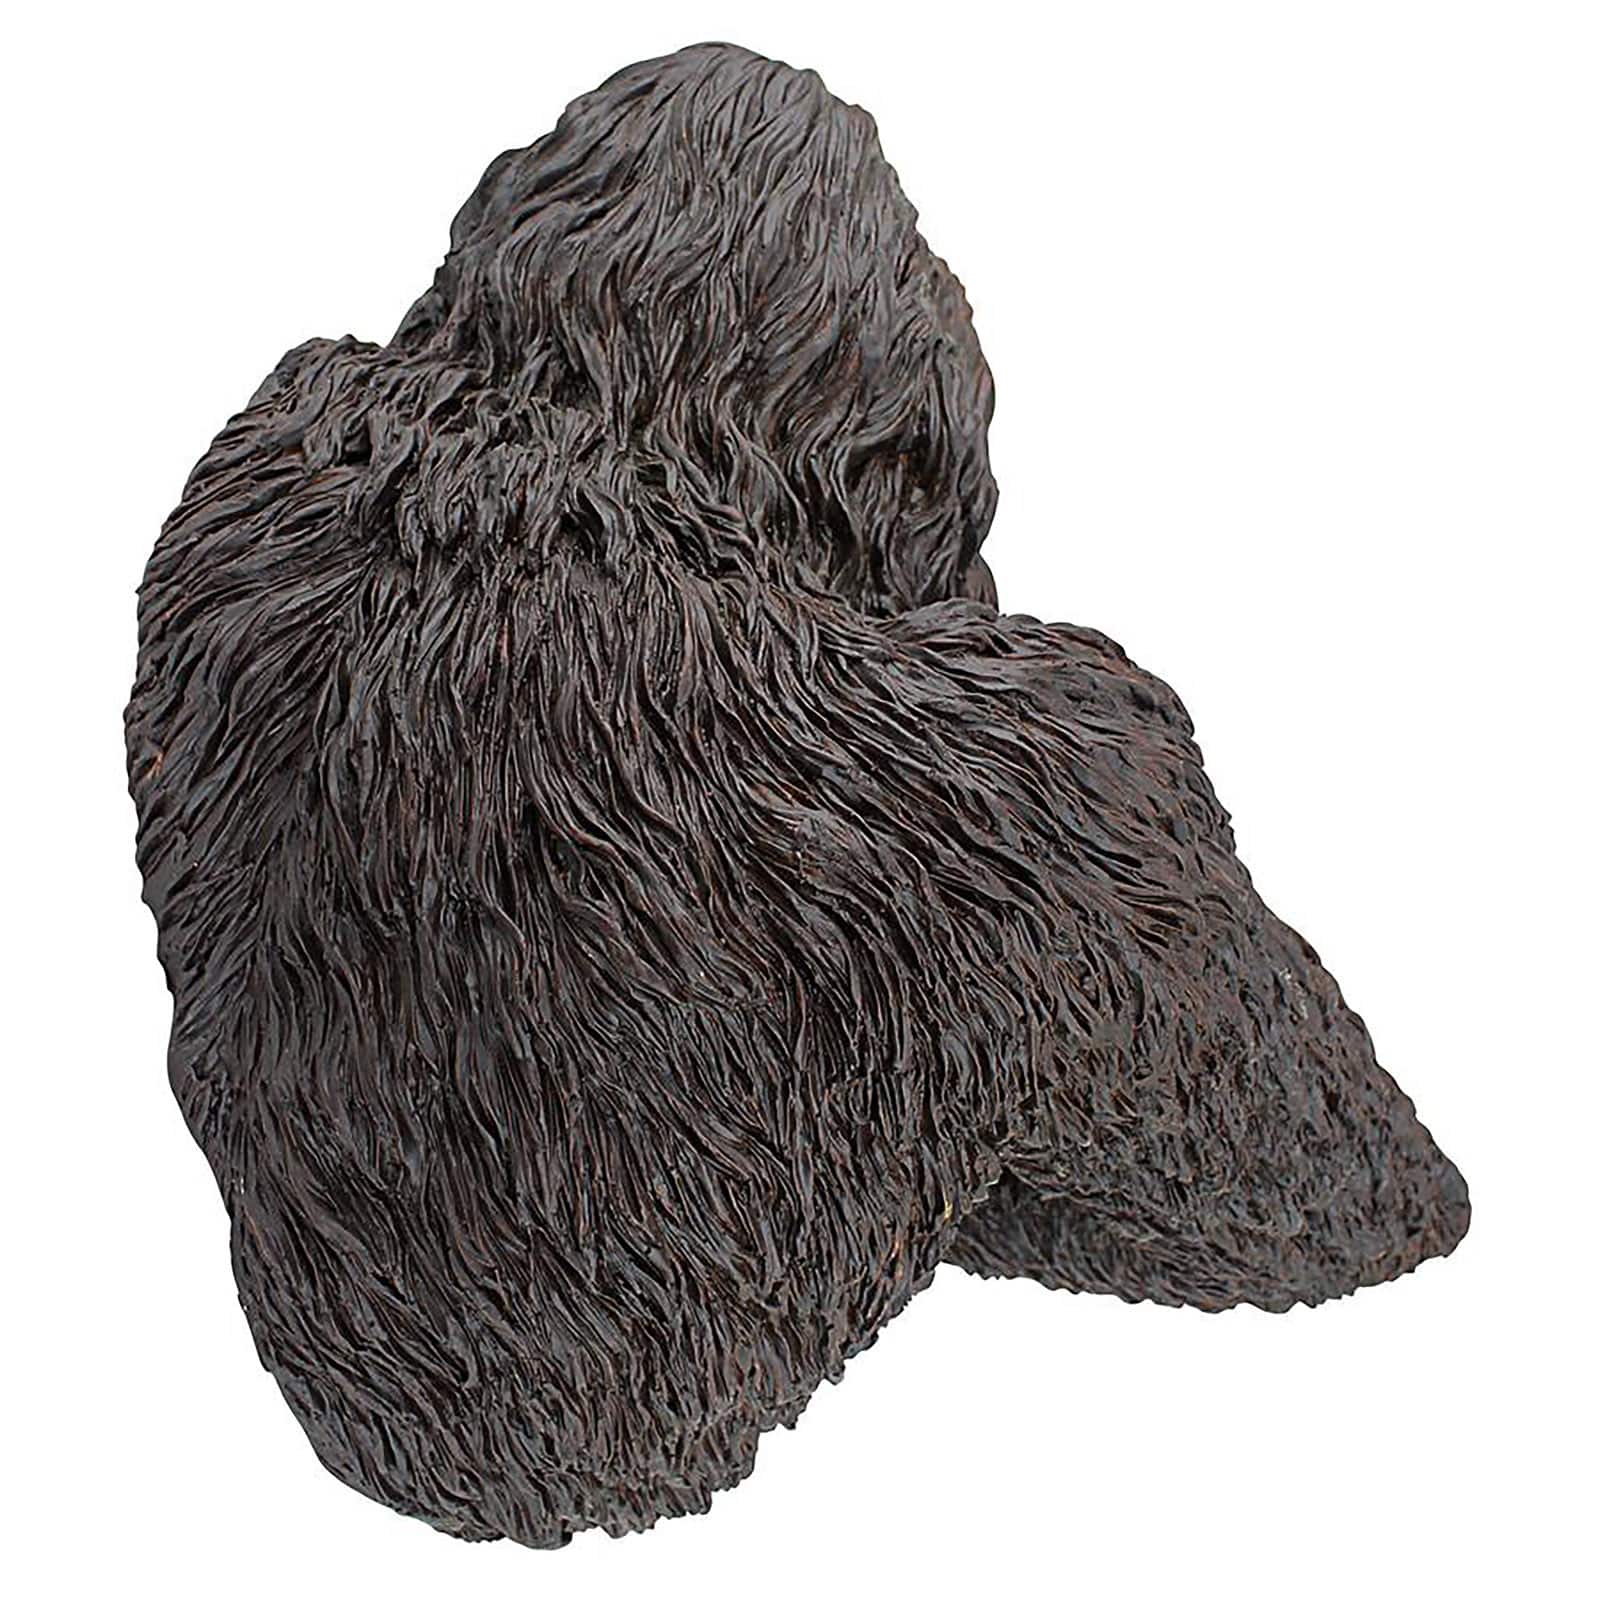 Design Toscano Bigfoot, the Bashful Yeti Tree Sculpture